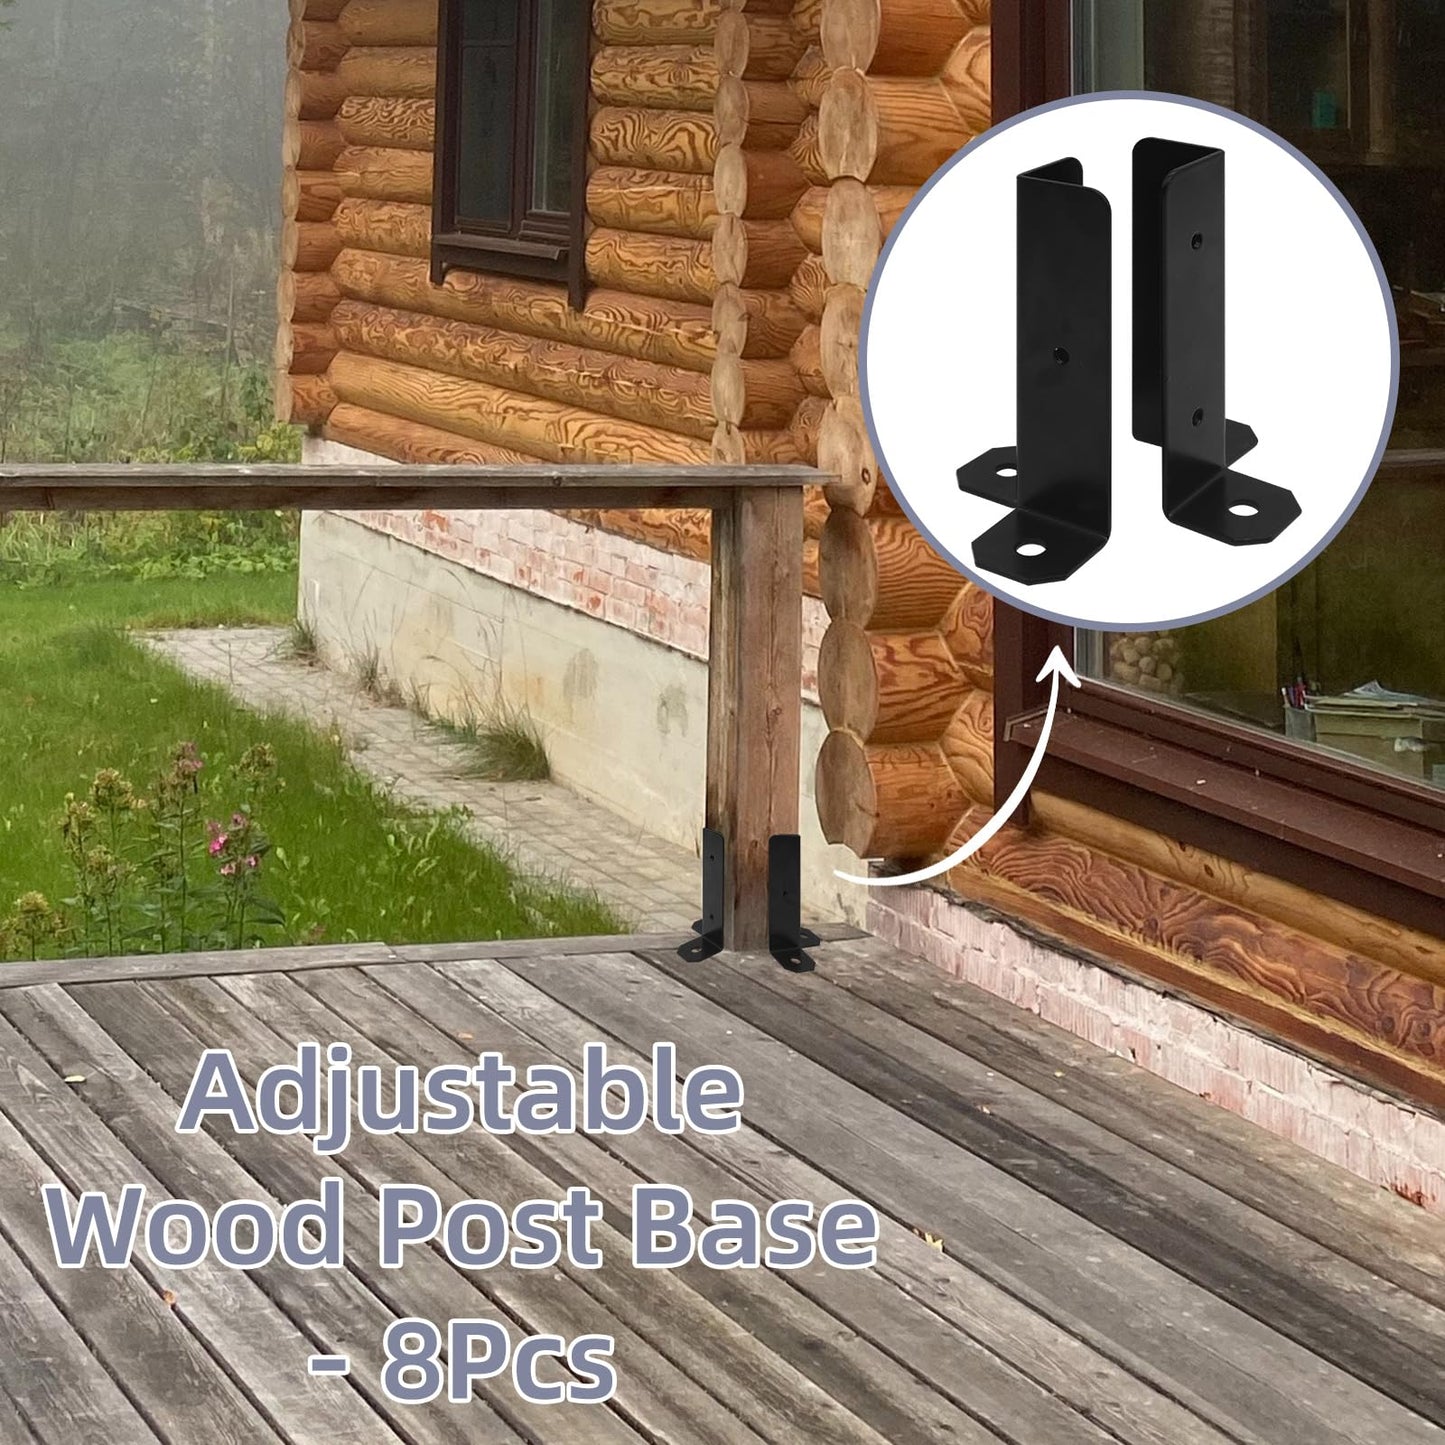 Cskunxia 8Pcs Adjustable Post Base Bracket Fit 1.5x1.5, 2x2, 2x4, 4x4 Post Deck Post Anchor Base Brackets Adjustable Wood Fence Pergola Brackets for Railing Mailbox Deck